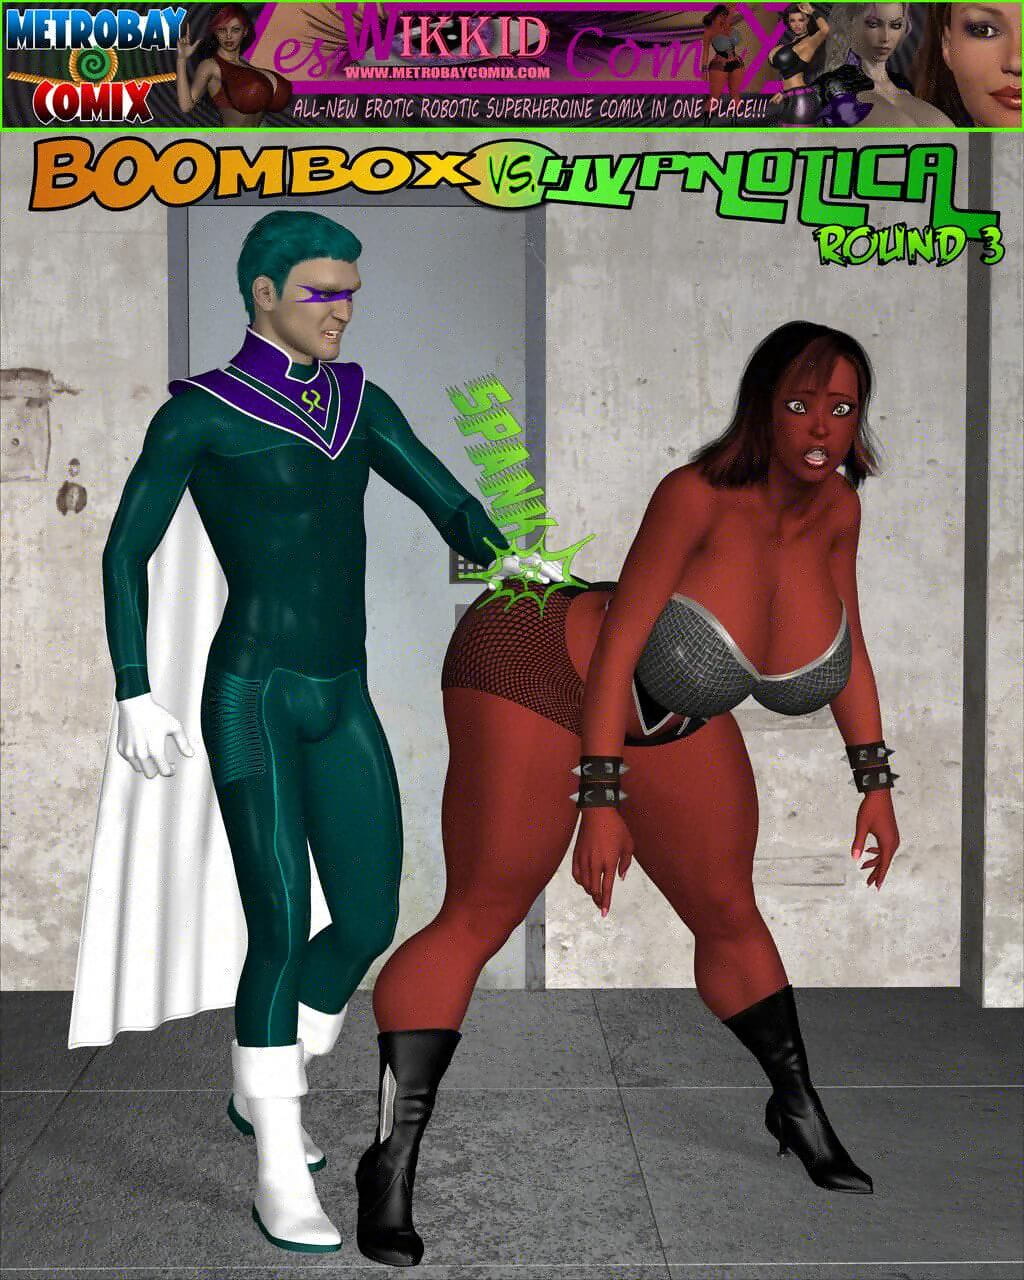 Metrobay- Boombox vs. Hypnotica- Round 3 page 1